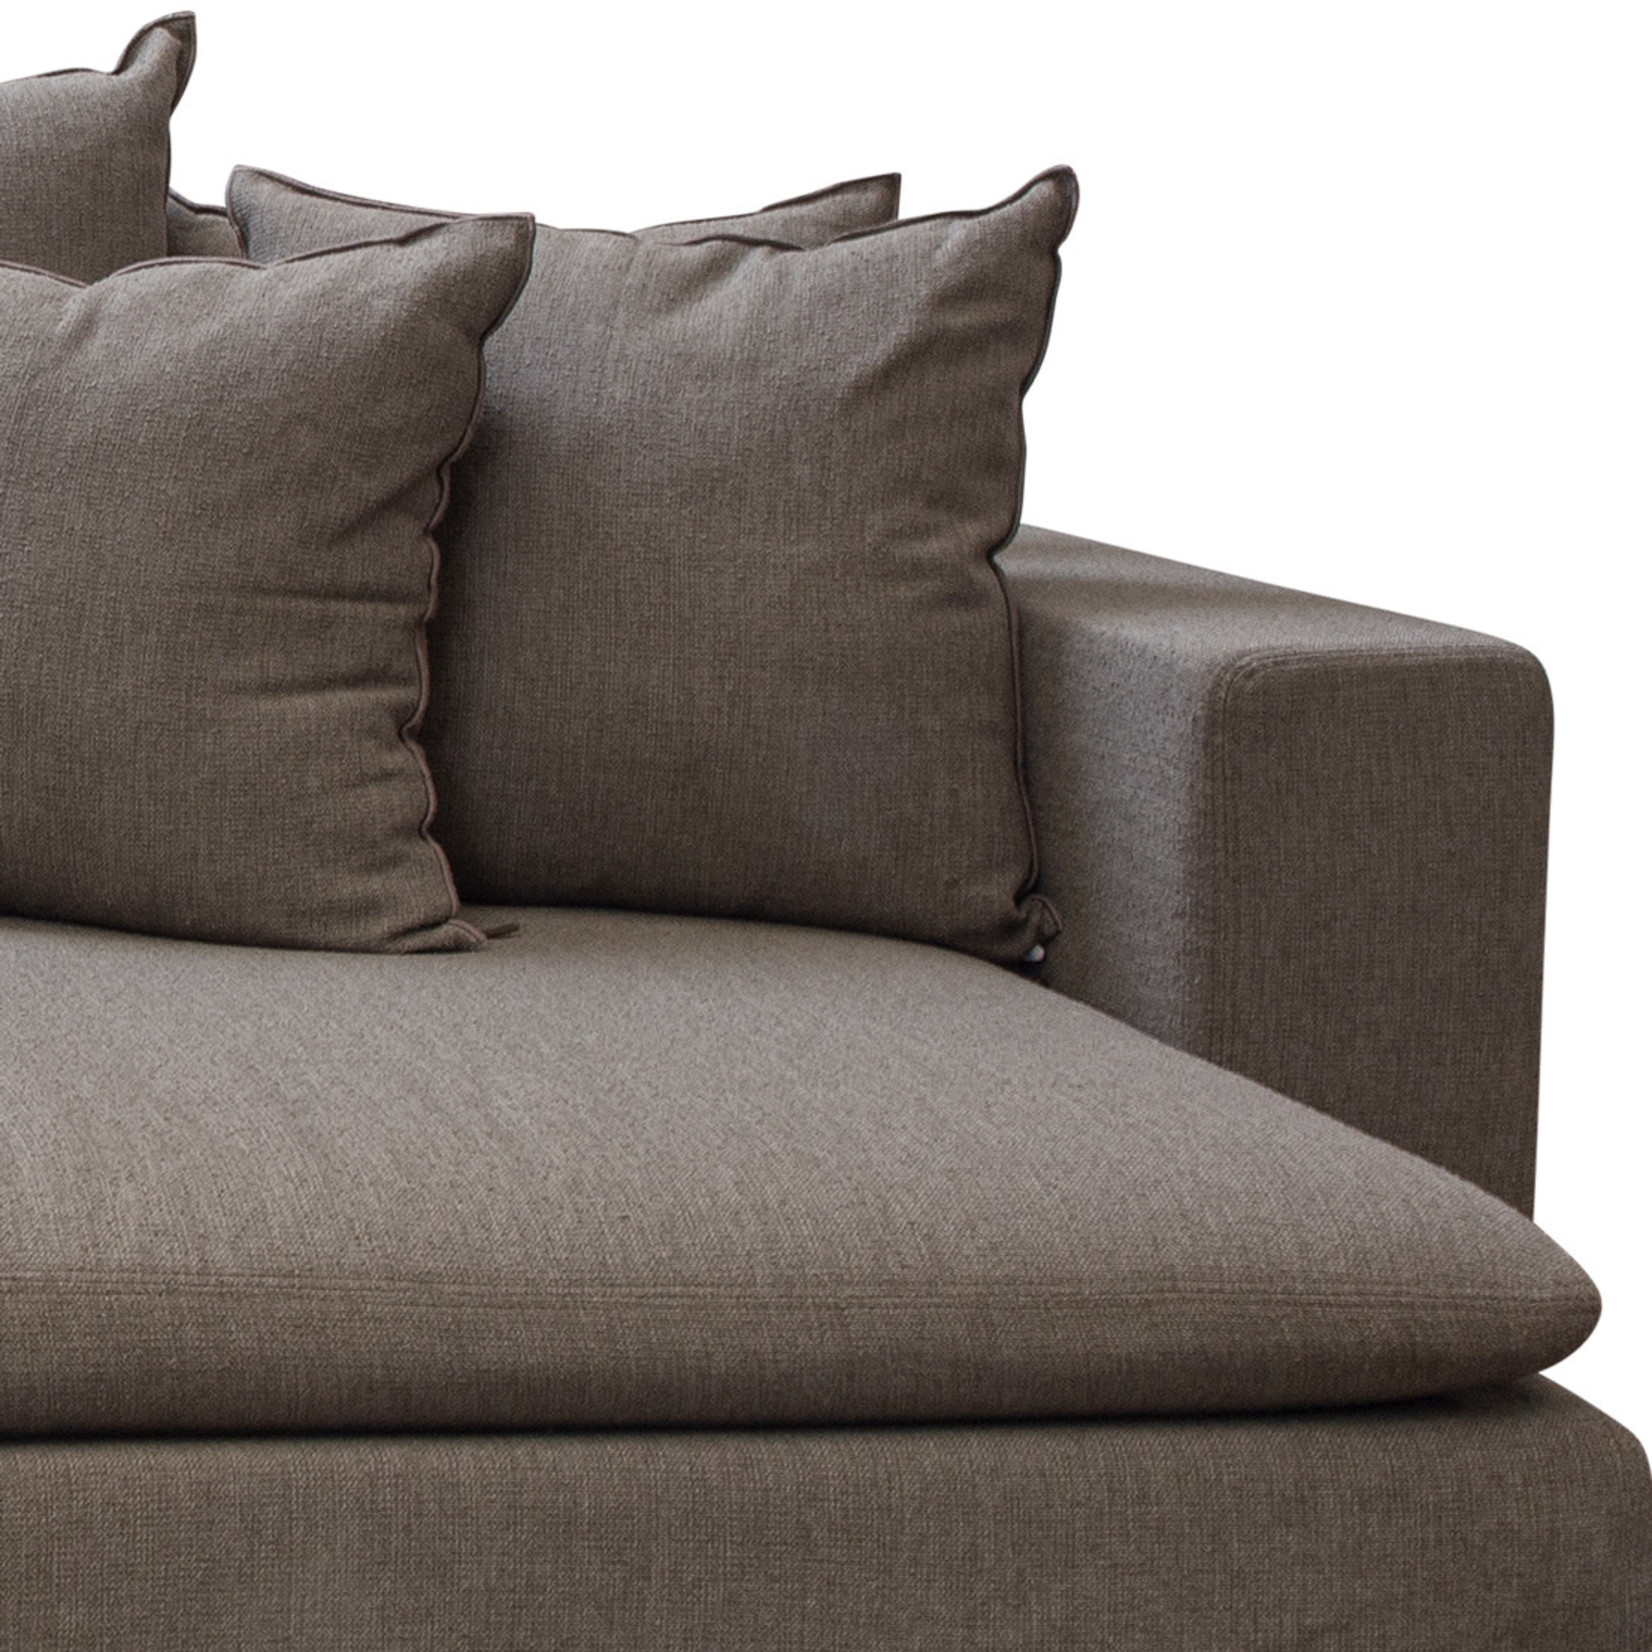 Sofa "Gypset" In-/Outdoor, 290x155xH65cm inkl. 2x80x80cm, 6x65x65cm & 2x50x70cm Kissen